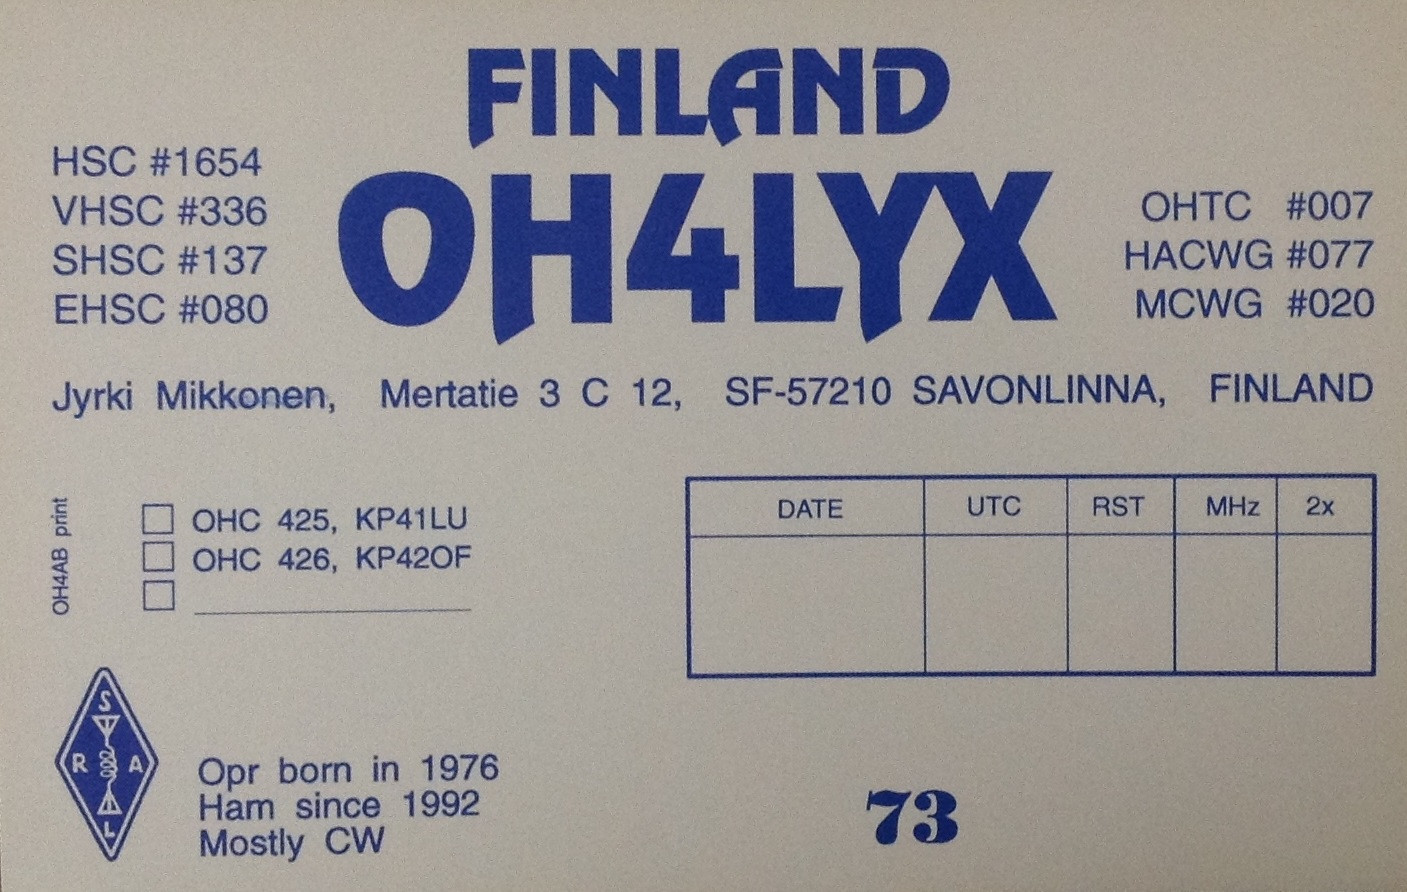 OH4X Kokkola, Finland